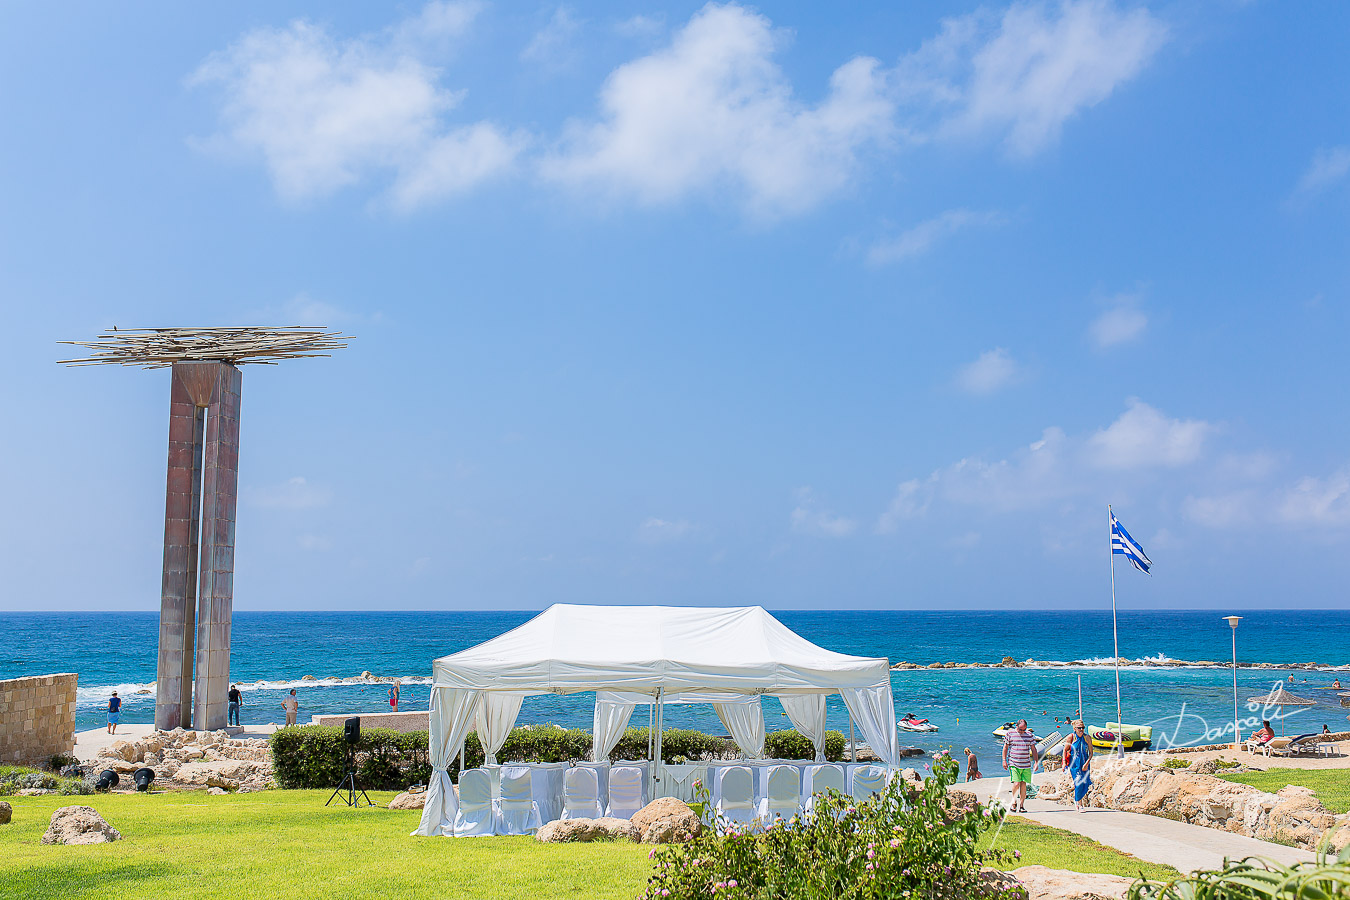 Beach Ceremony arrangements for a Jewish Wedding Ceremony in Cyprus.